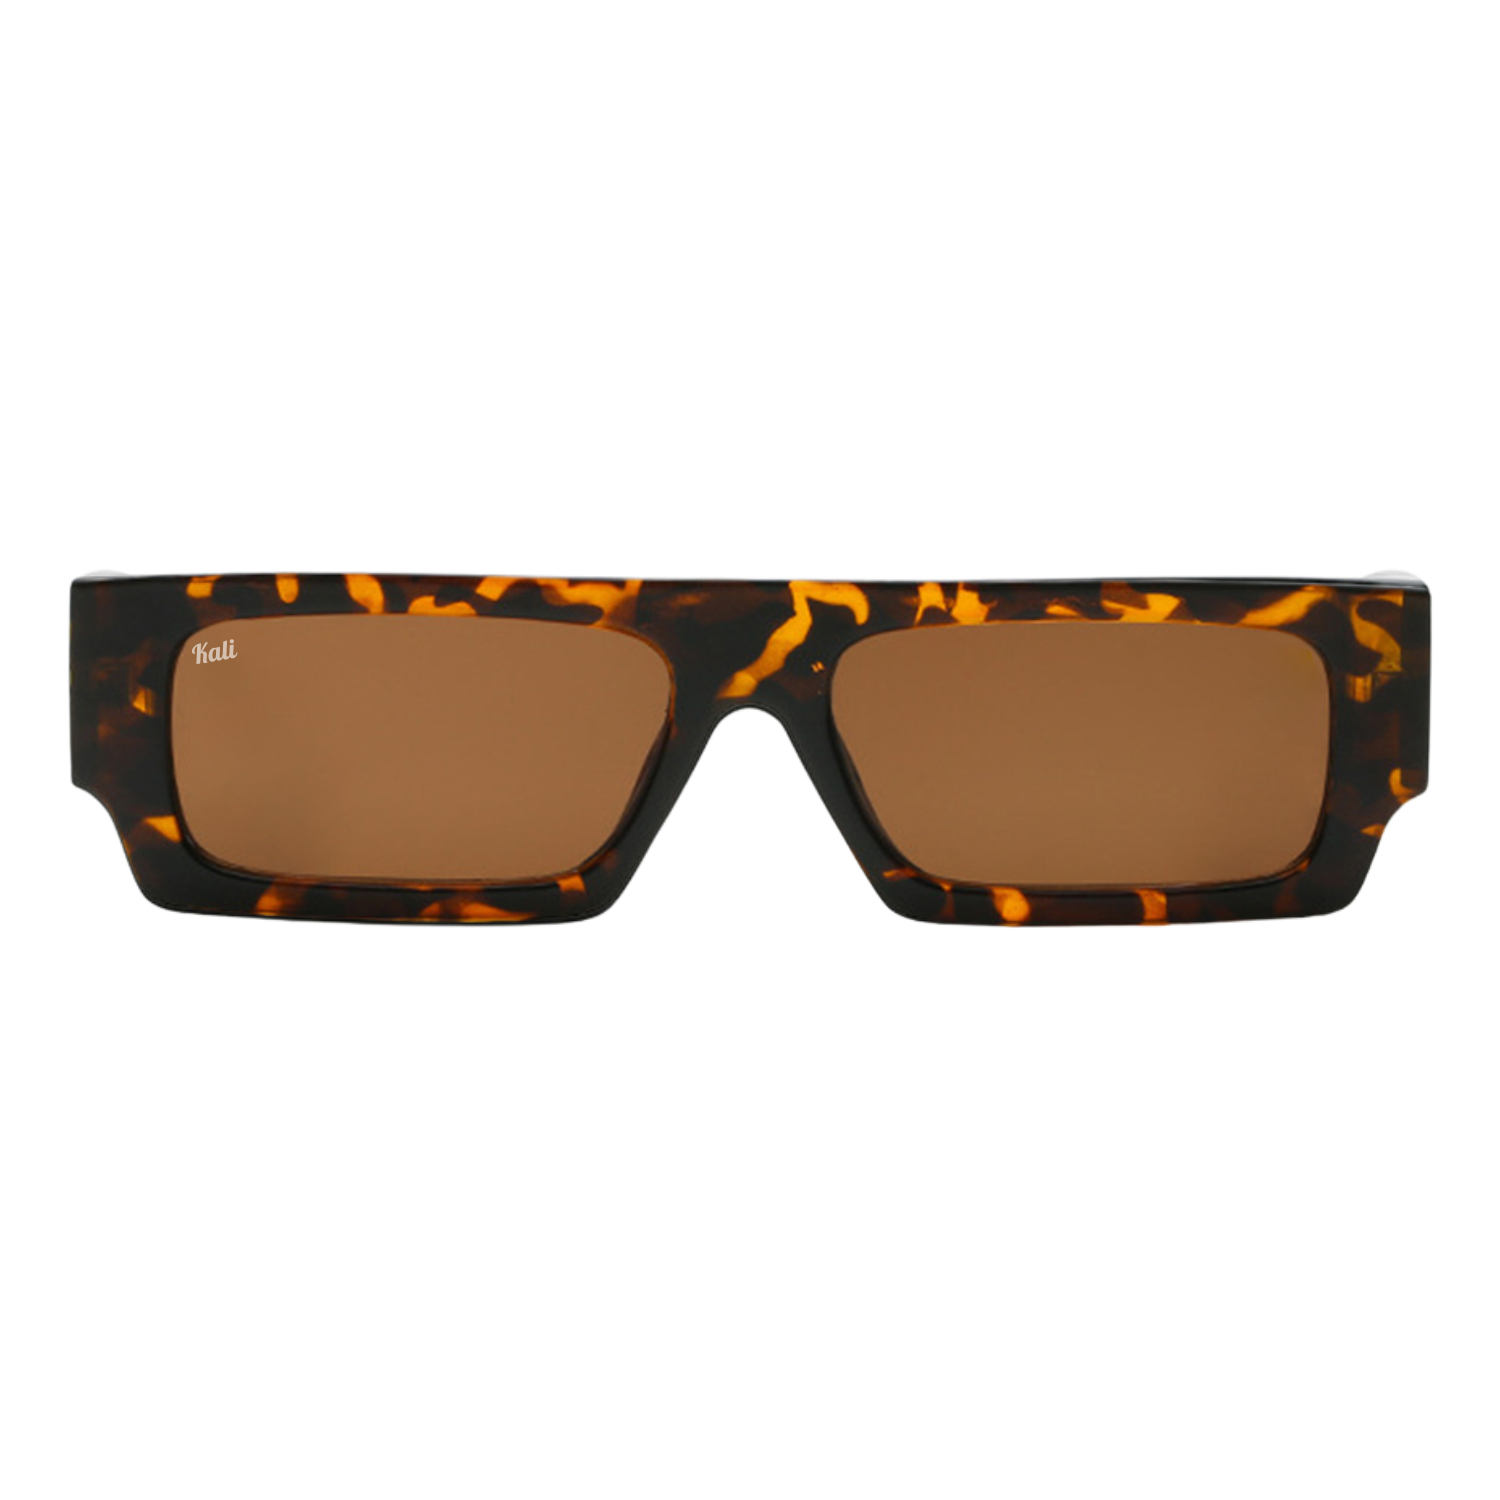 New square sunglasses 